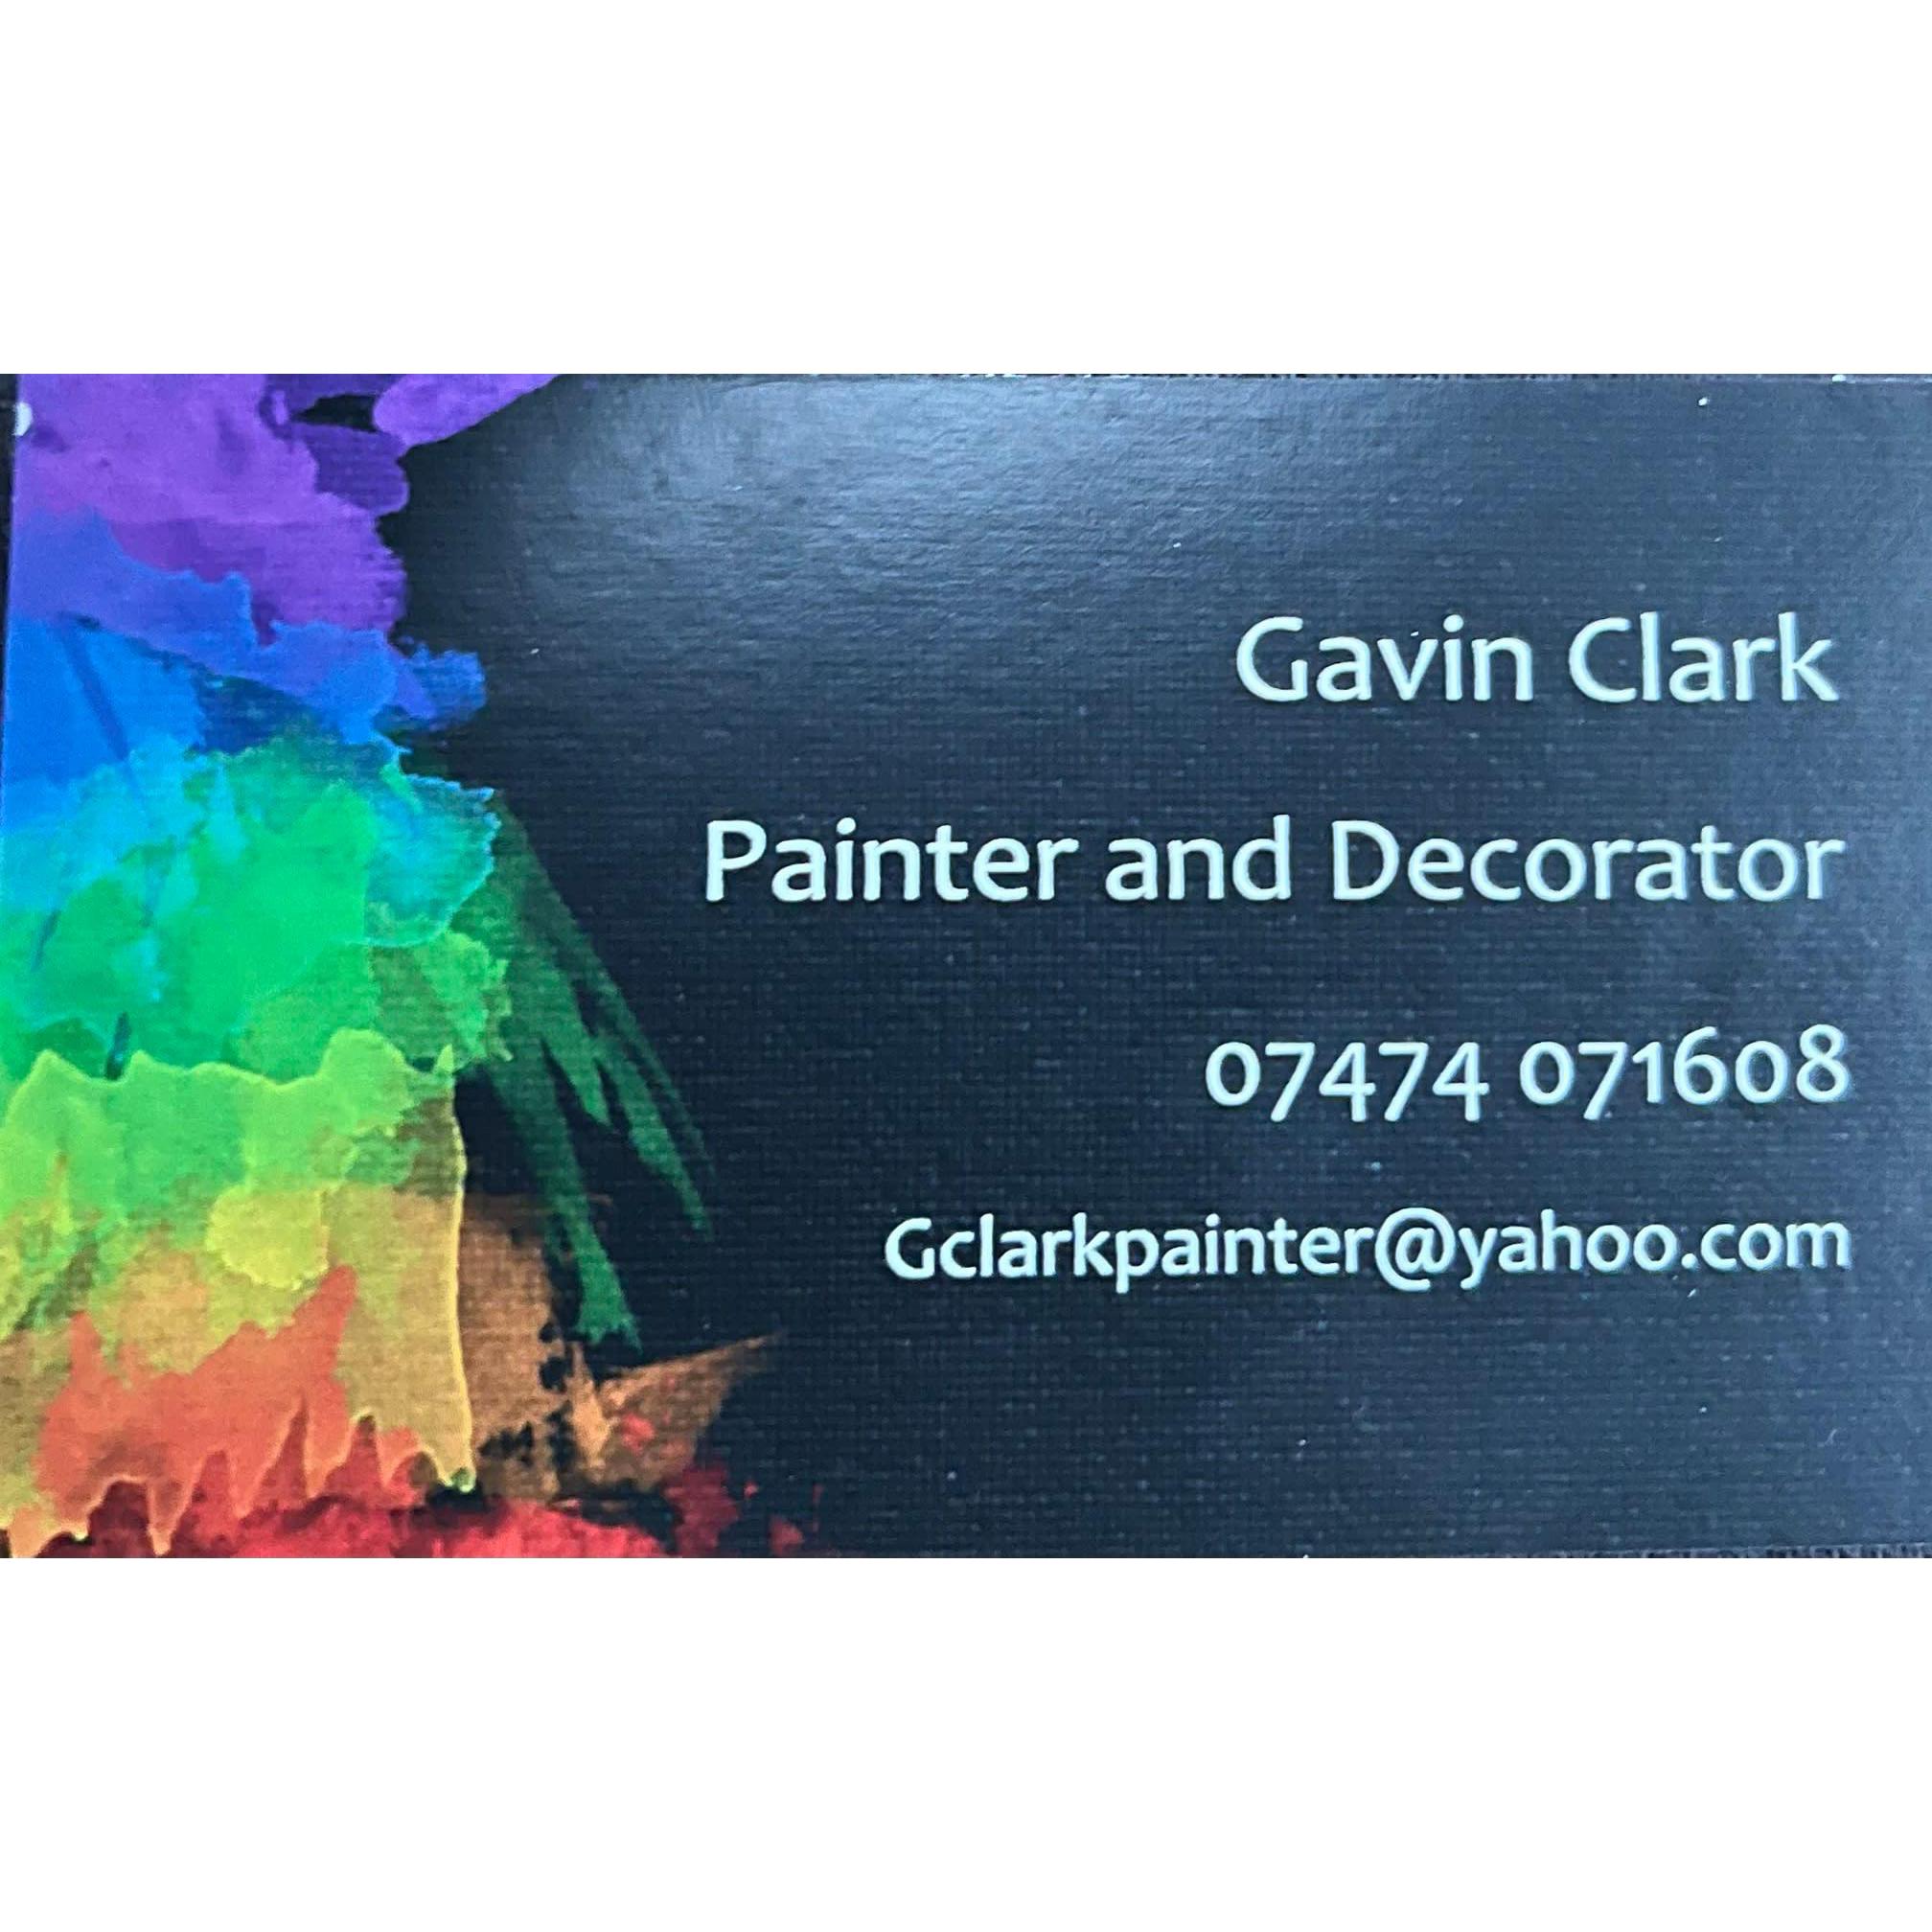 Gavin Clark Painter and Decorator - Mauchline, Ayrshire KA5 6AU - 07474 071608 | ShowMeLocal.com